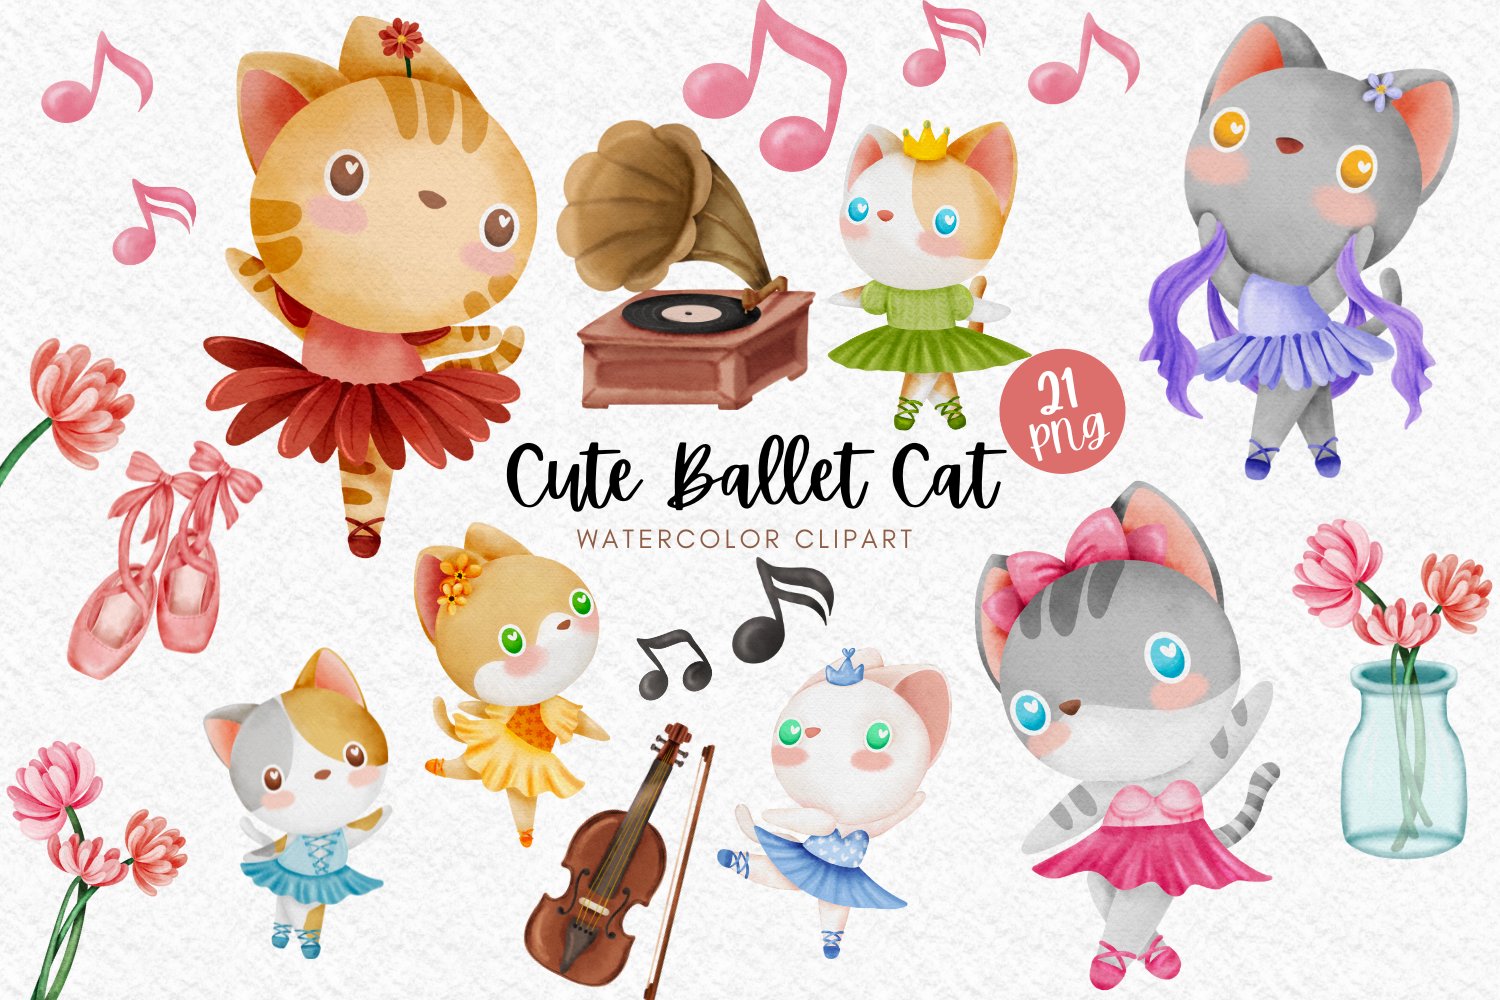 Cute Ballet Cat watercolor clipart cover image.